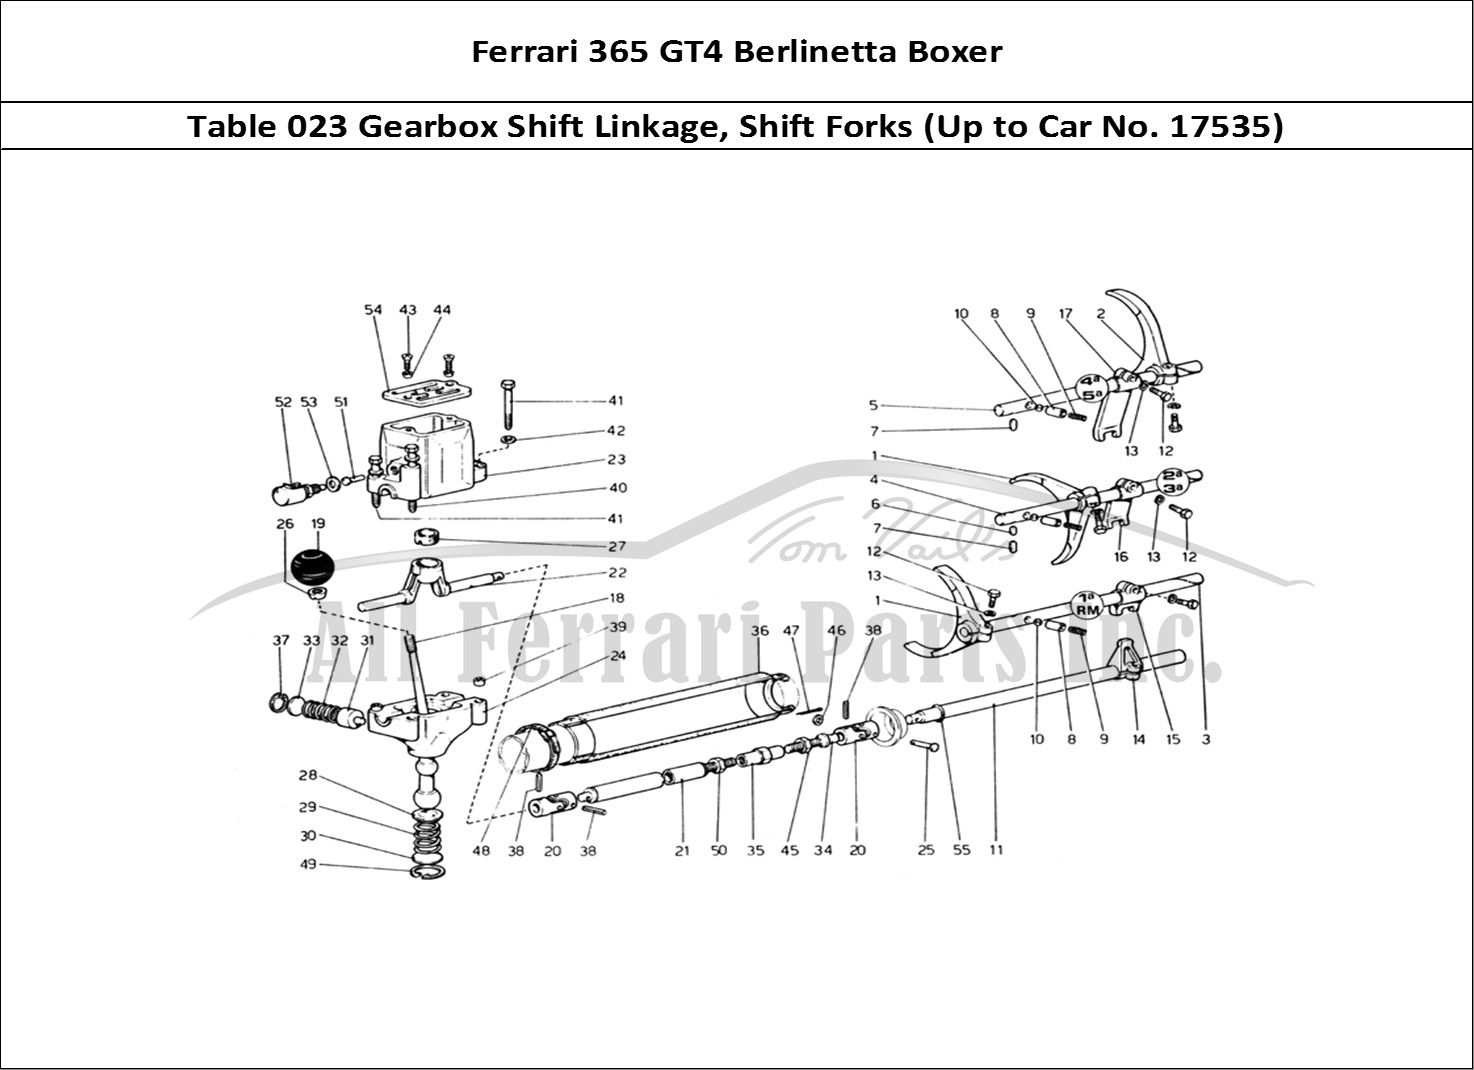 Ferrari Parts Ferrari 365 GT4 Berlinetta Boxer Page 023 Gearbox Controls (Up To C